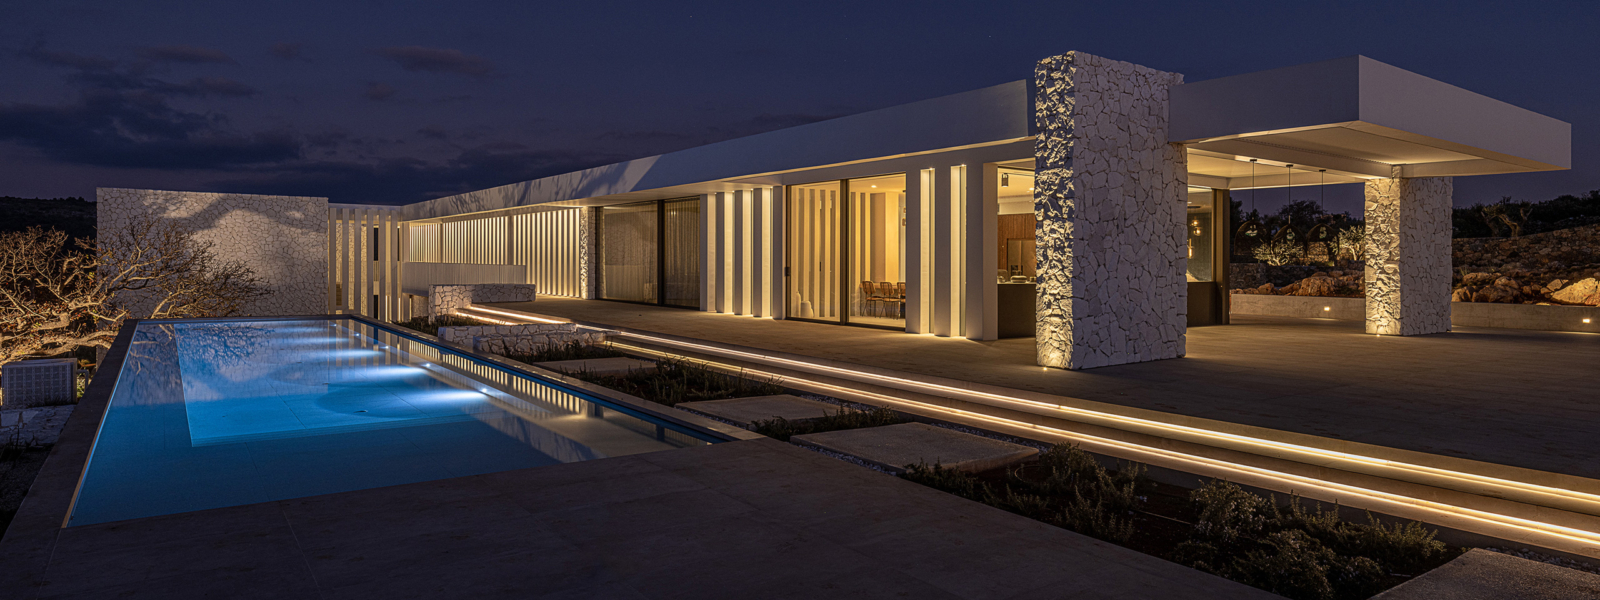 Luxury Villa In Crete By Night